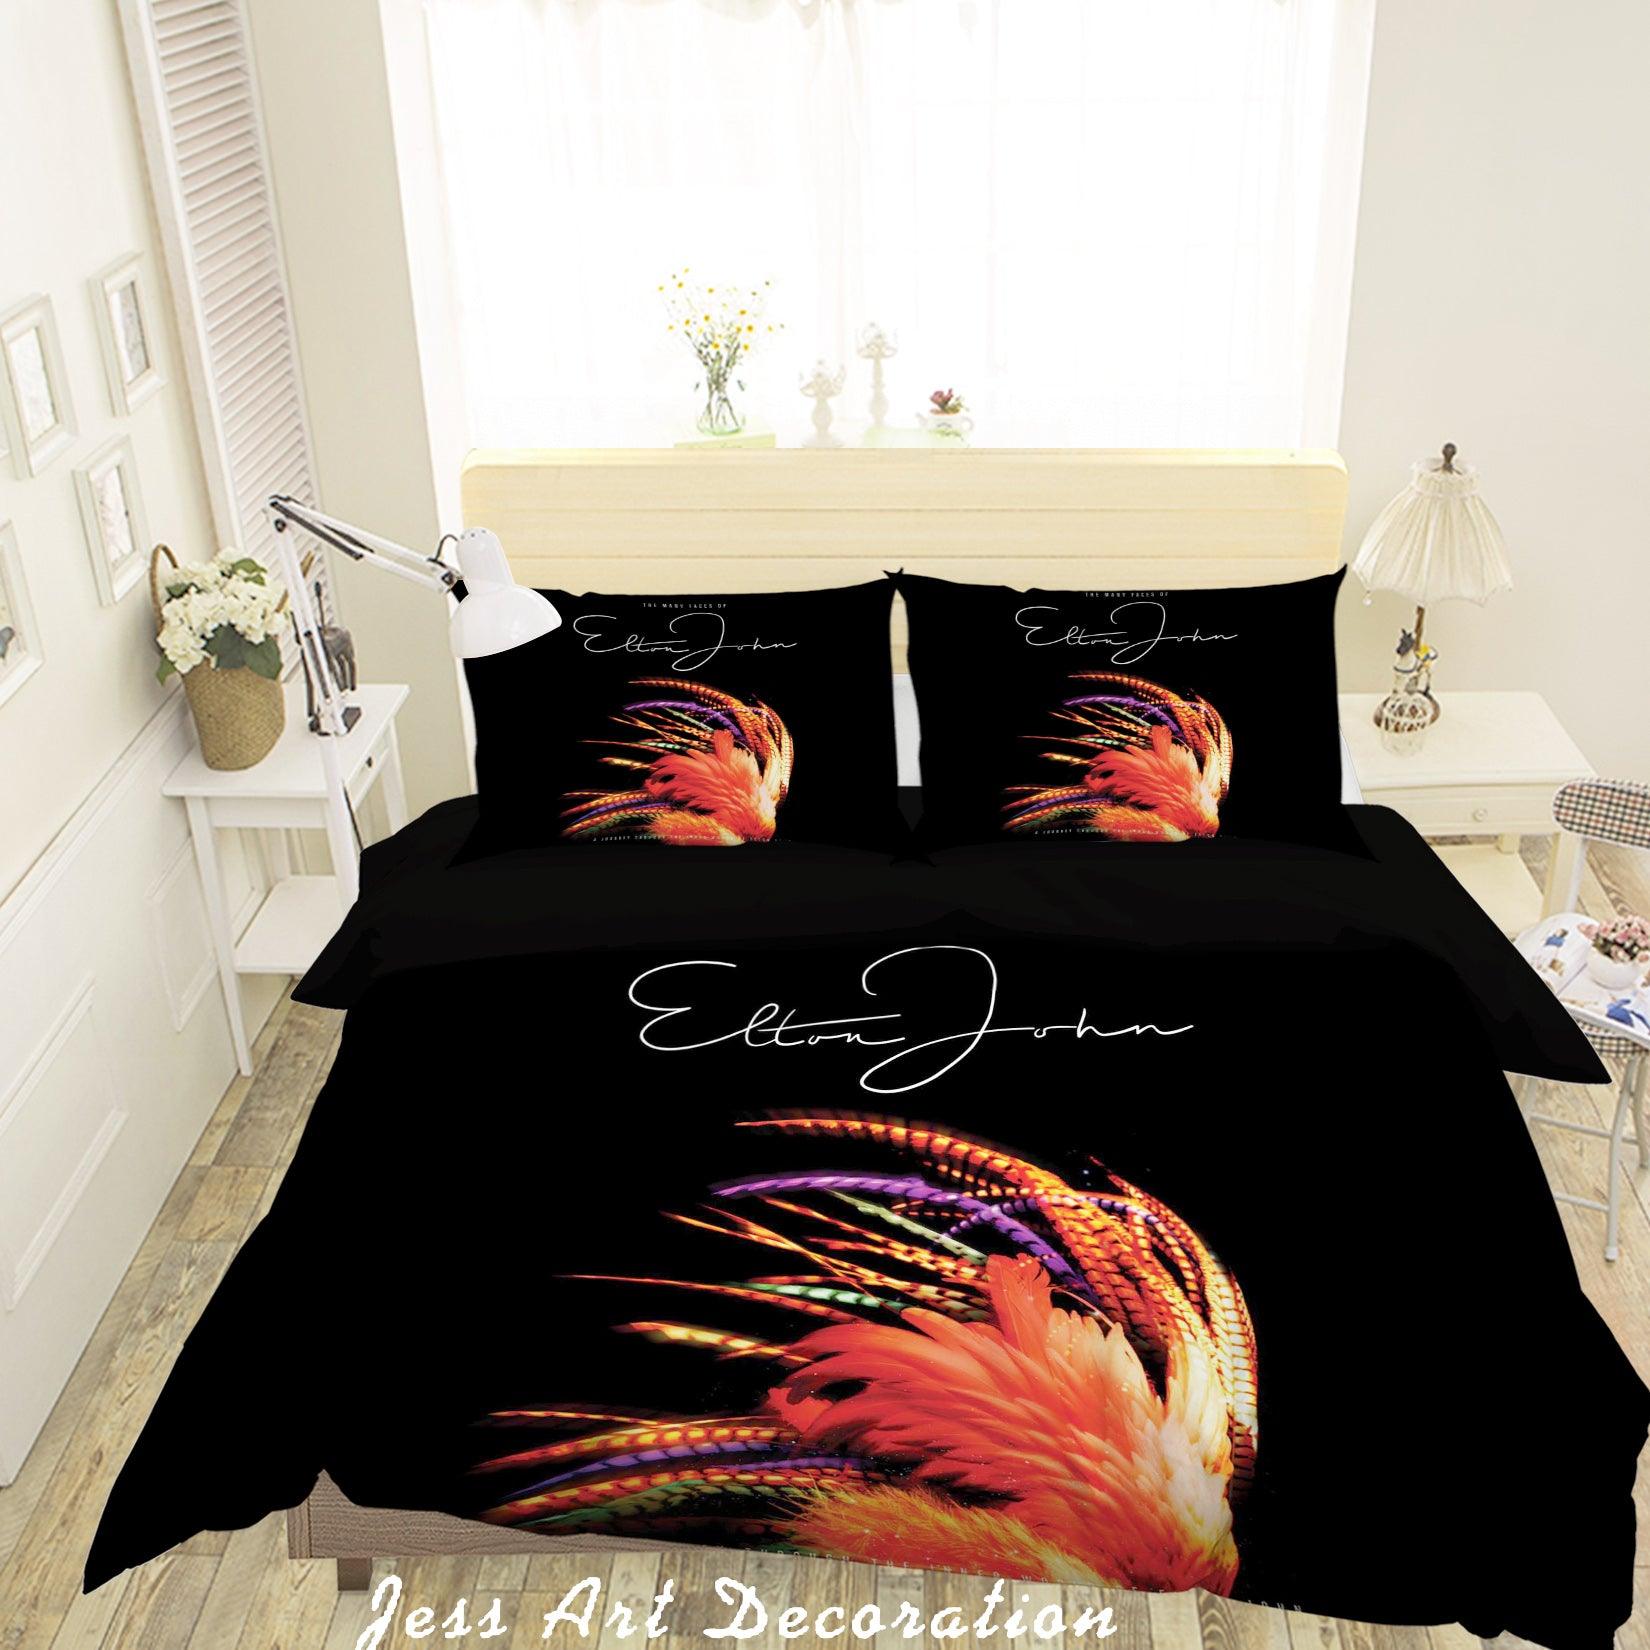 3D Elton John Quilt Cover Set Bedding Set Pillowcases 111- Jess Art Decoration